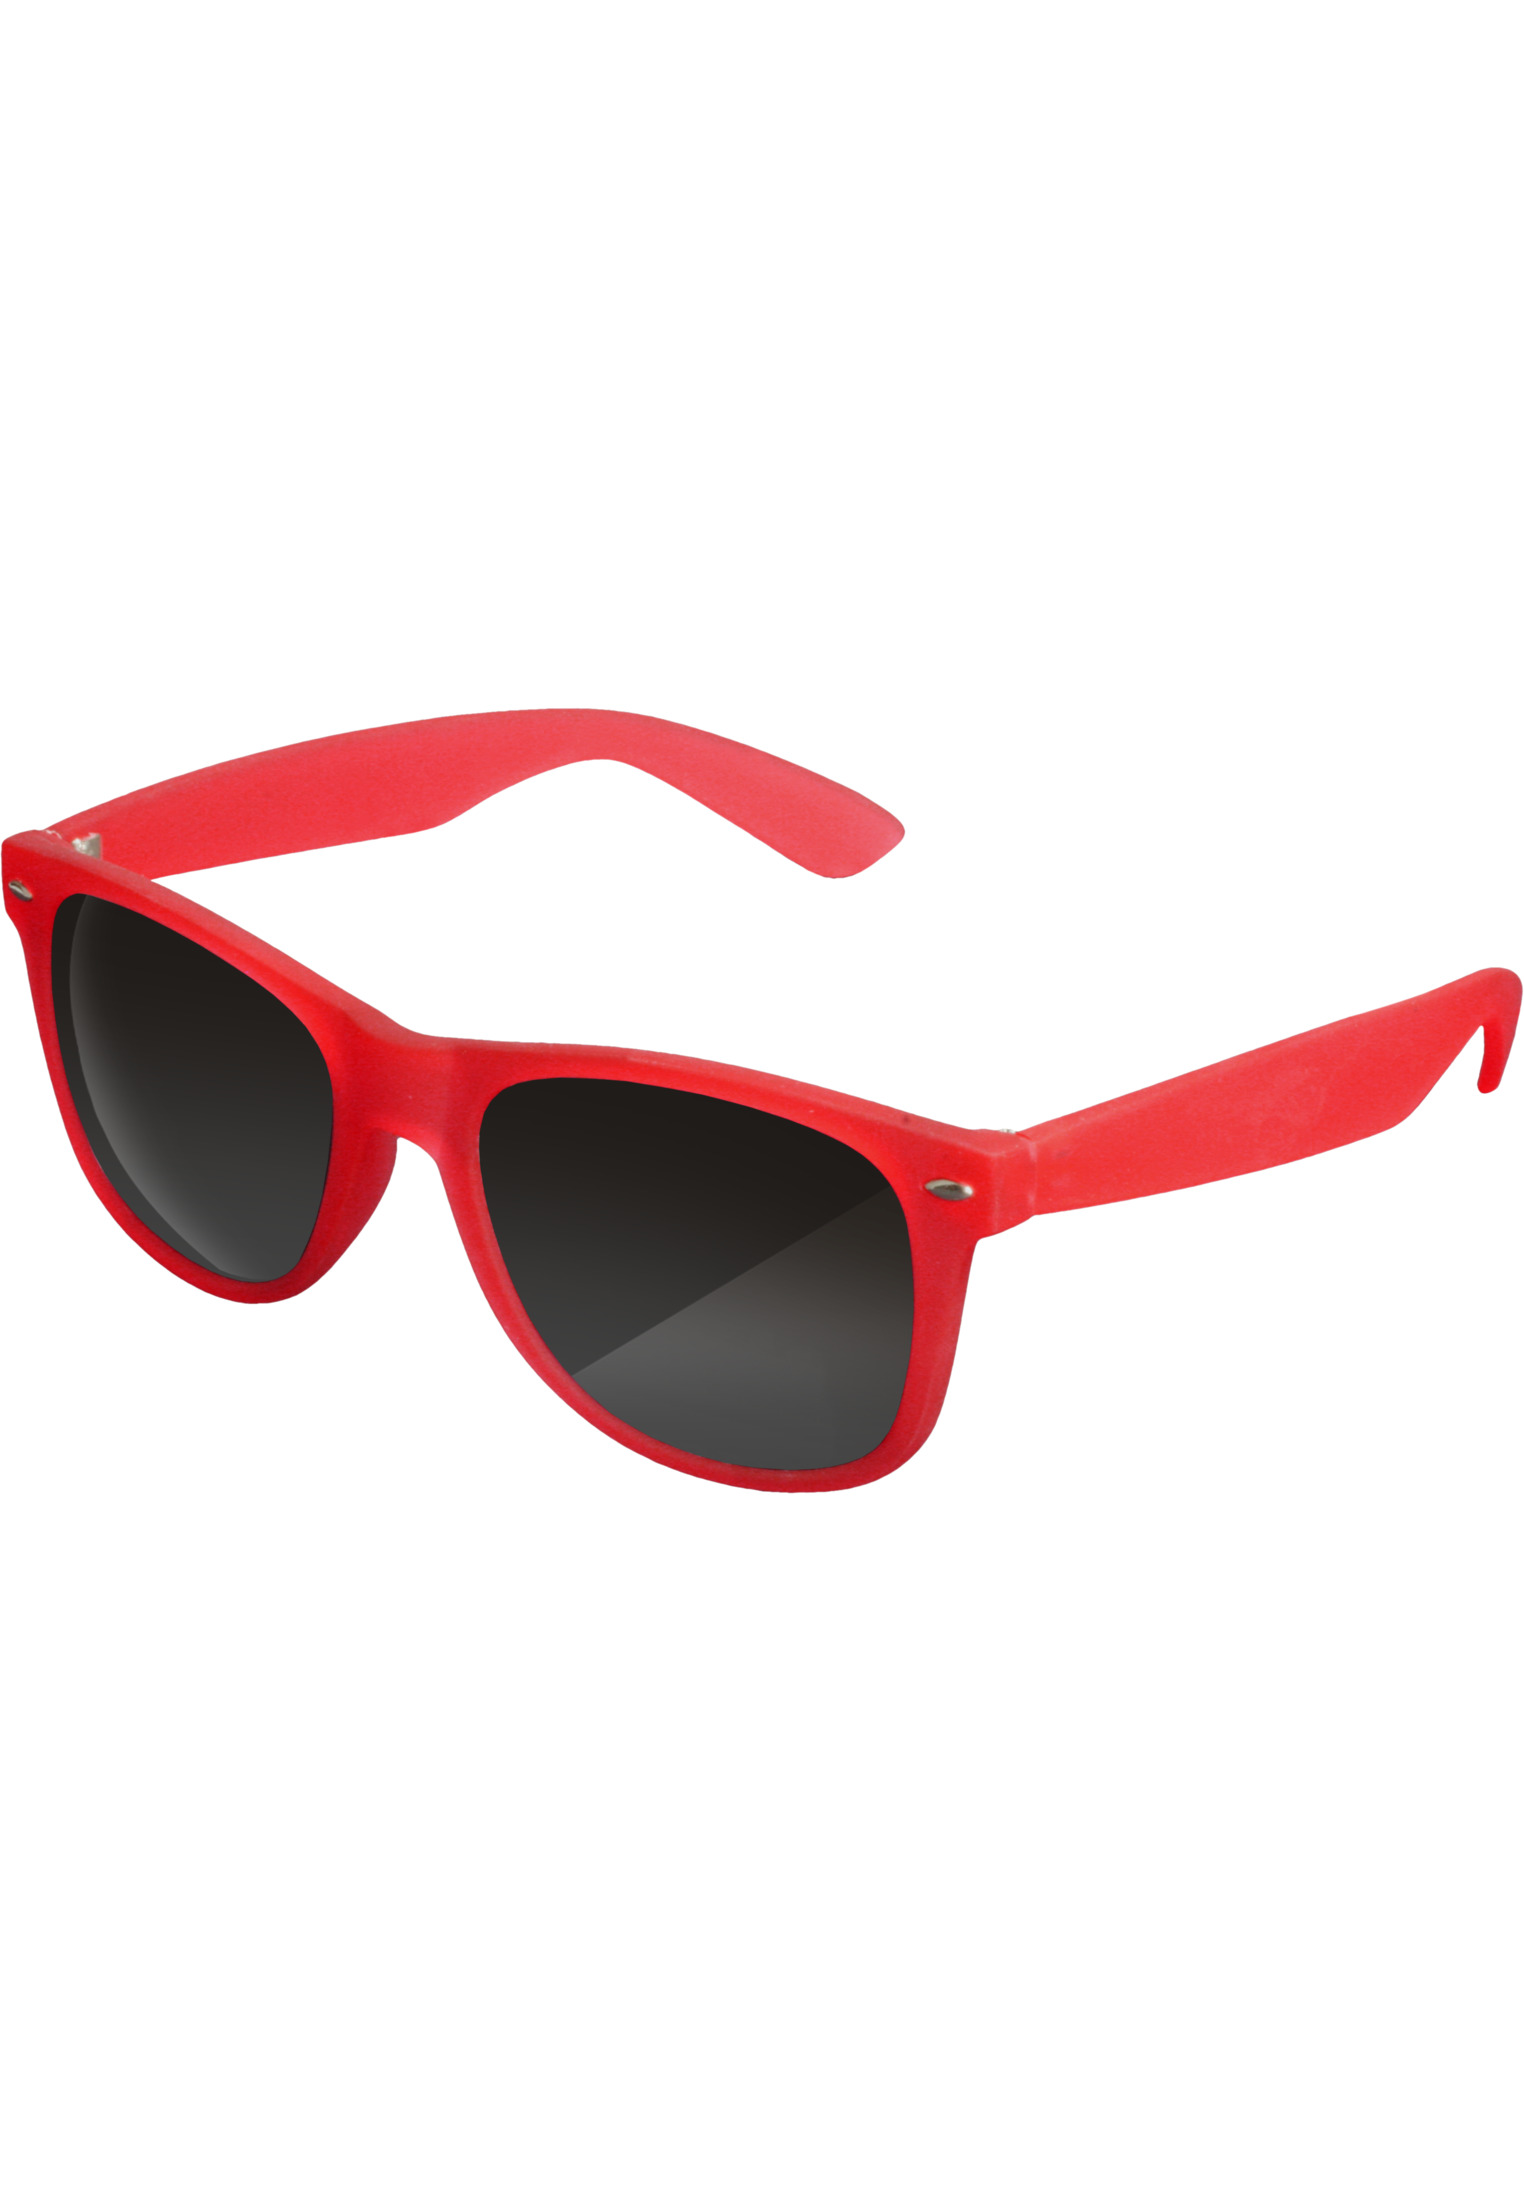 Likoma sunglasses red